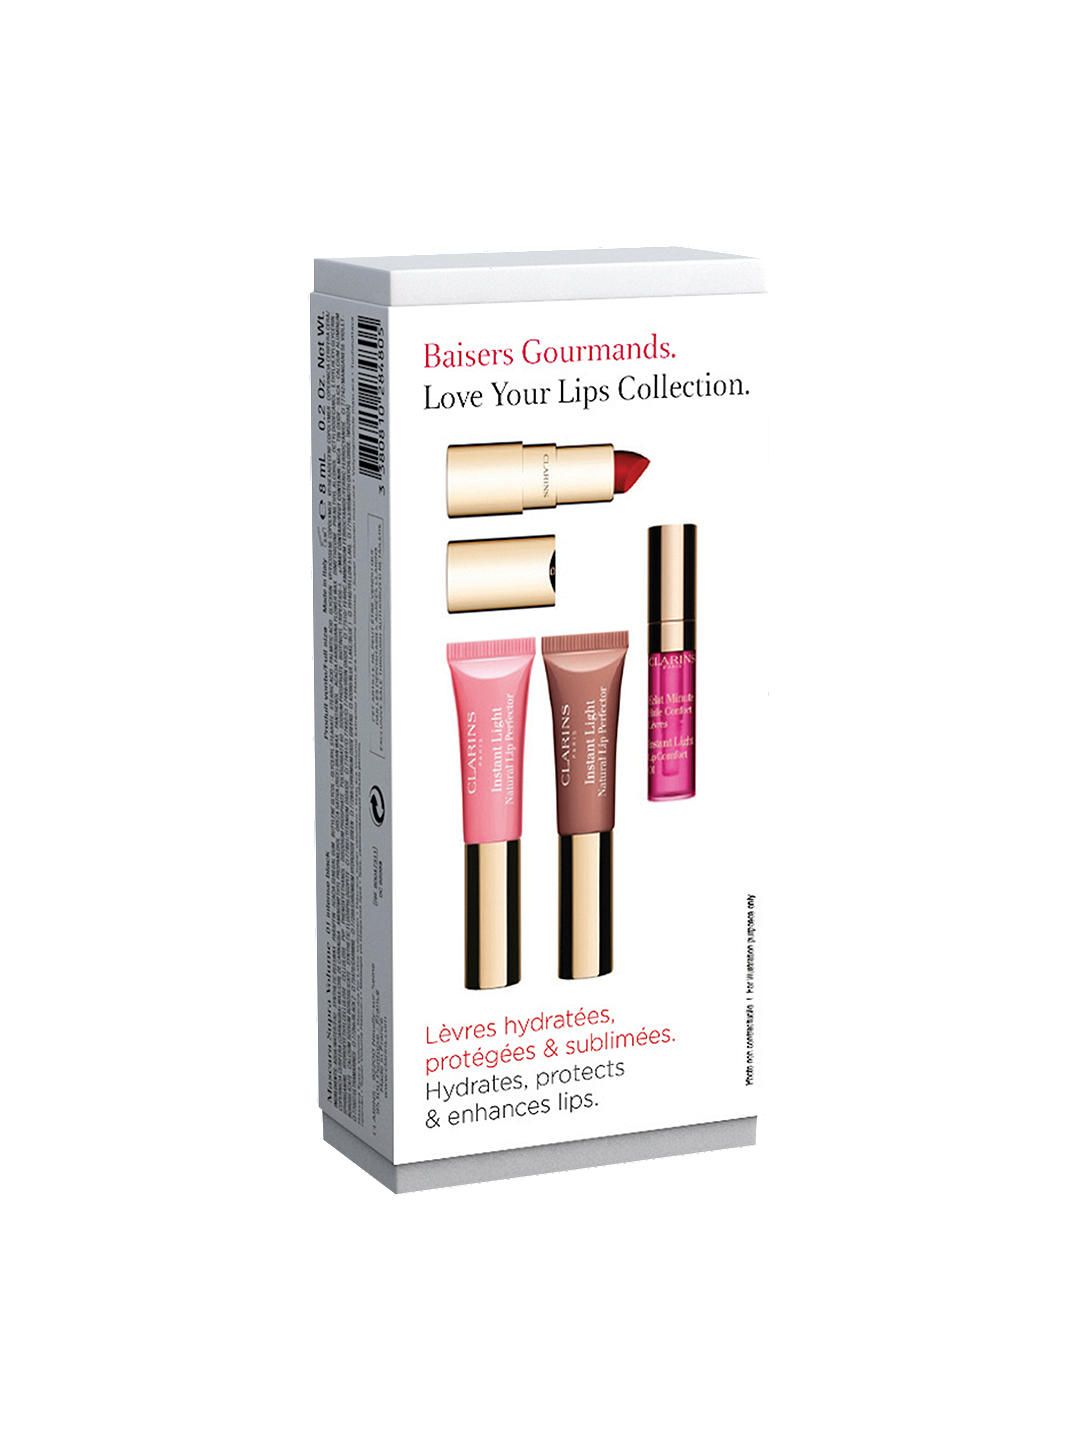 1 25 - Clarins Beautiful Lips Collection Makeup Gift Set